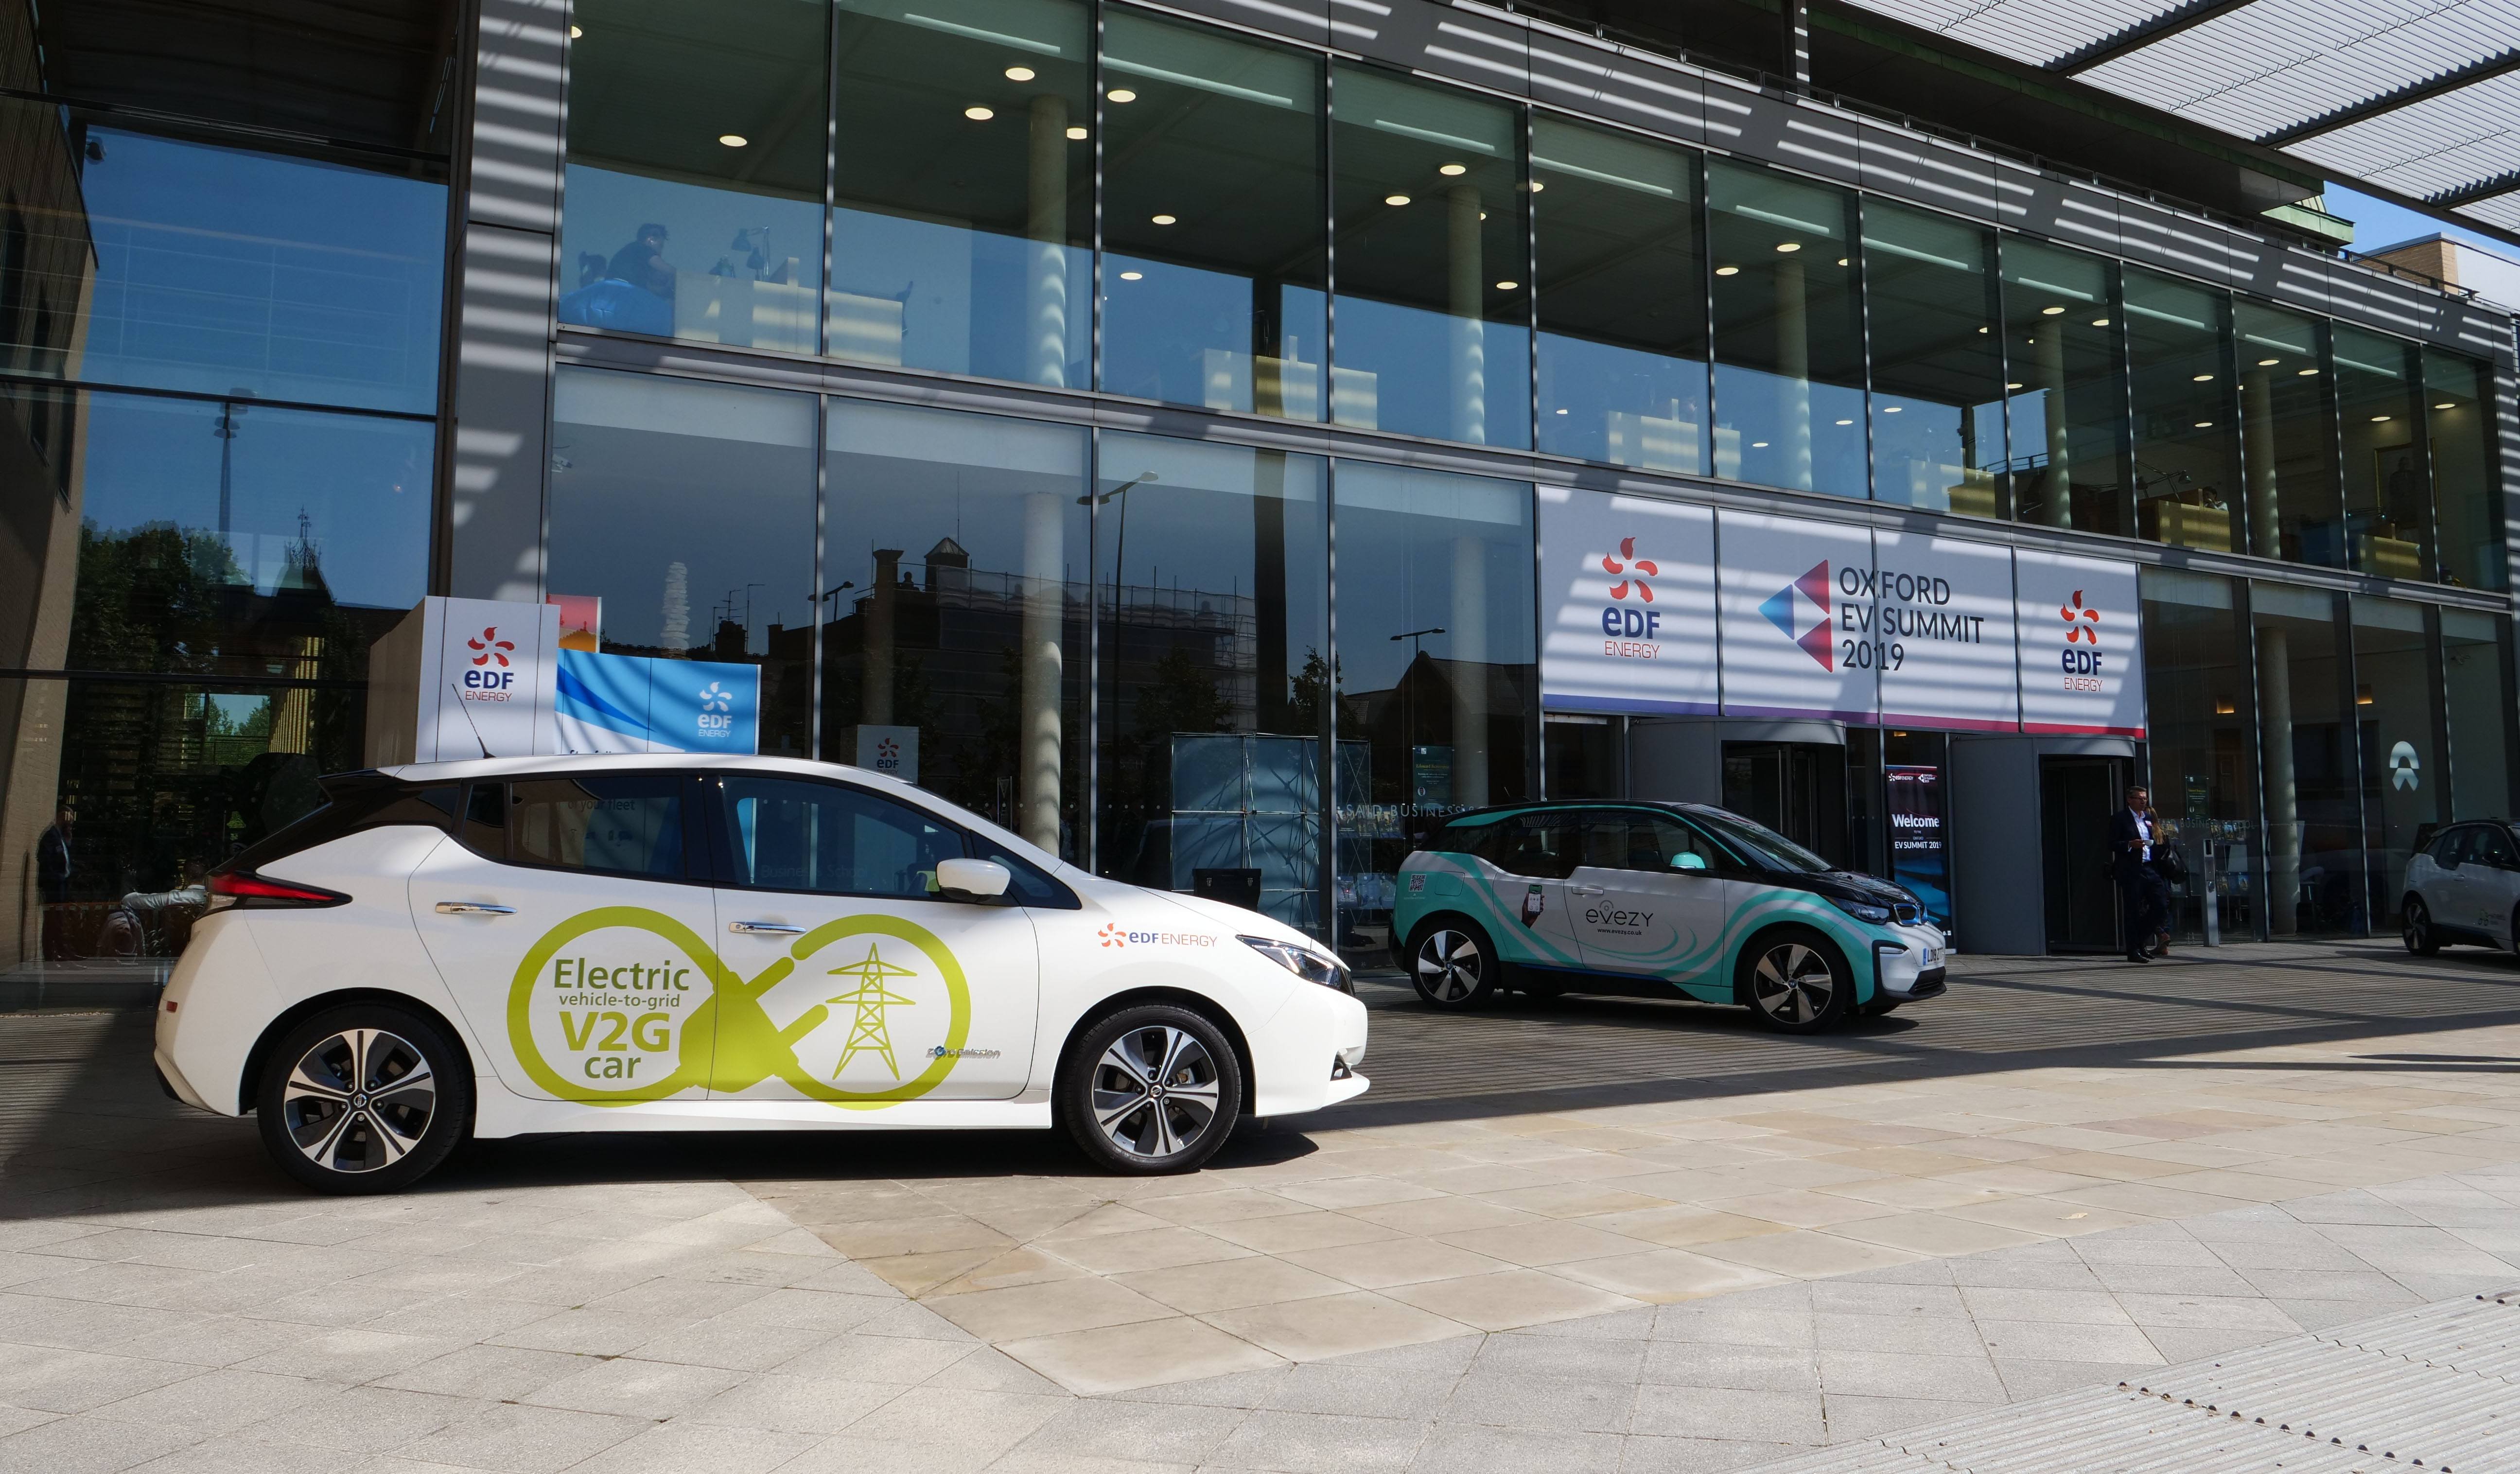 EDF Energy's Vehicle to Grid (V2G) car on show.